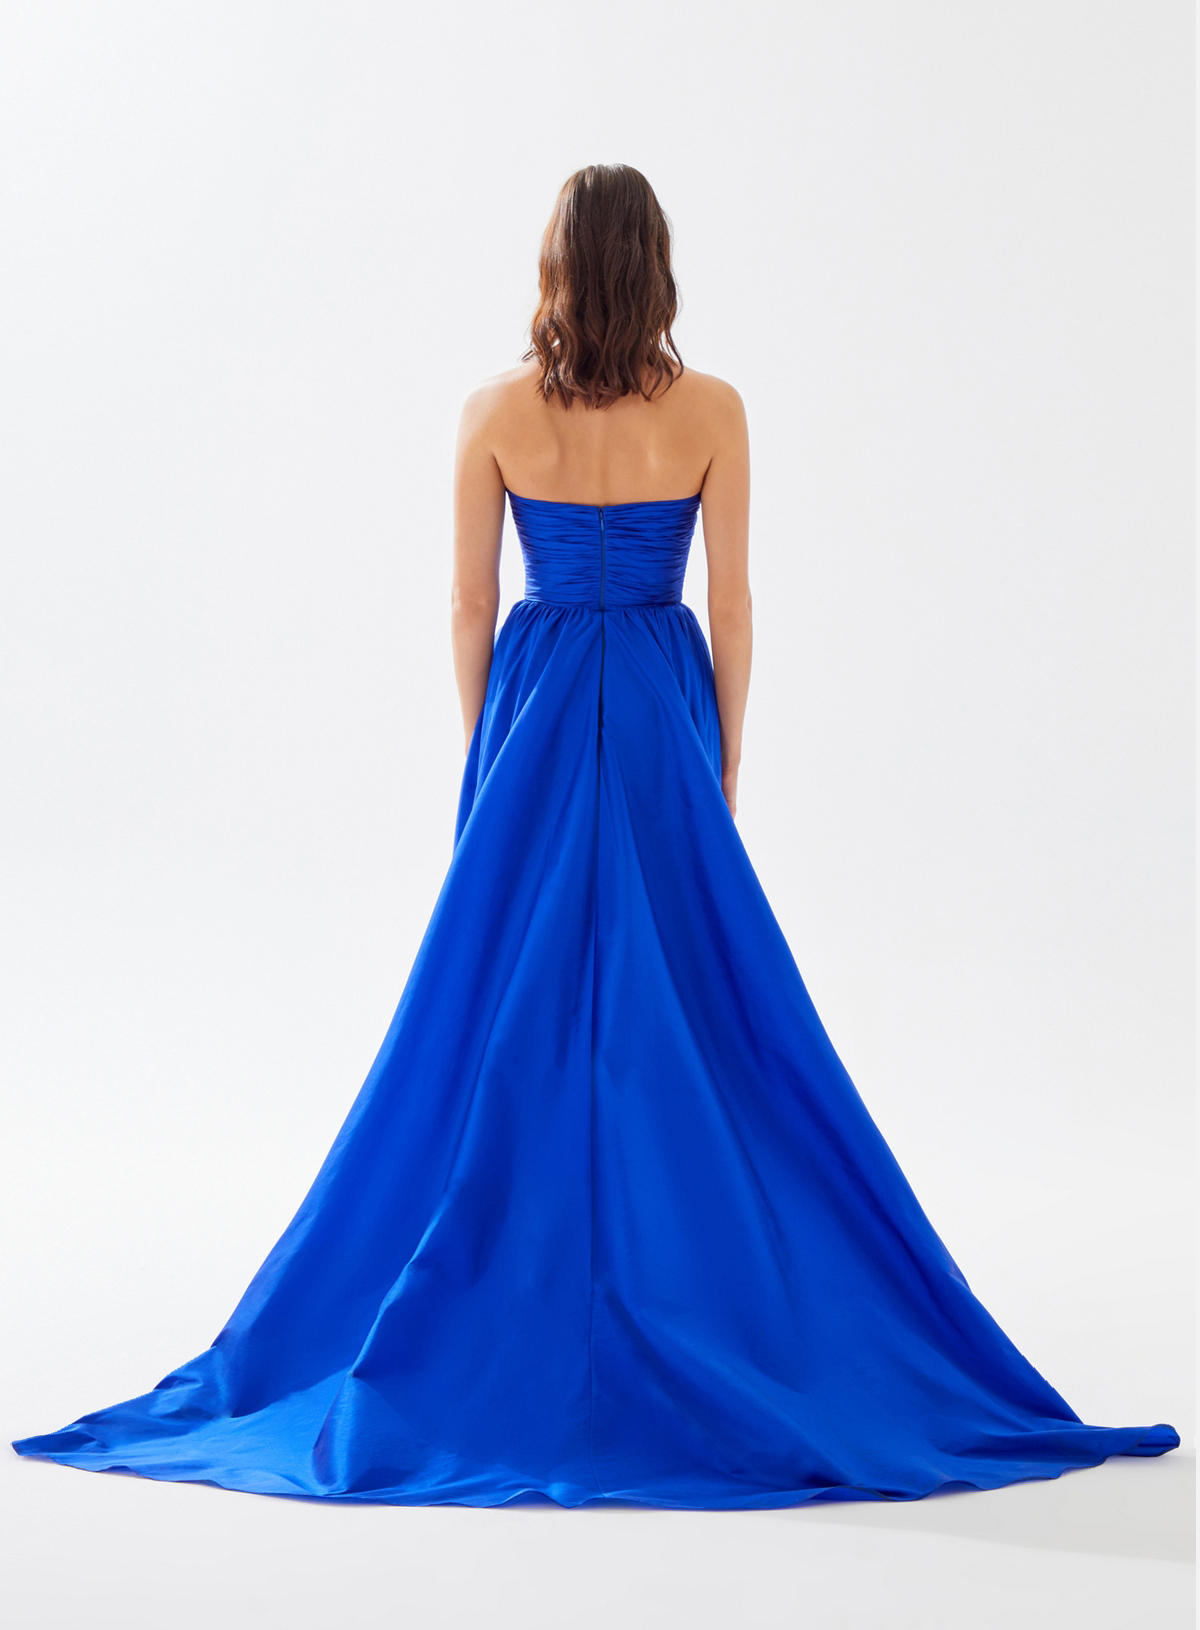 Picture of Maıa Royal Blue Dress